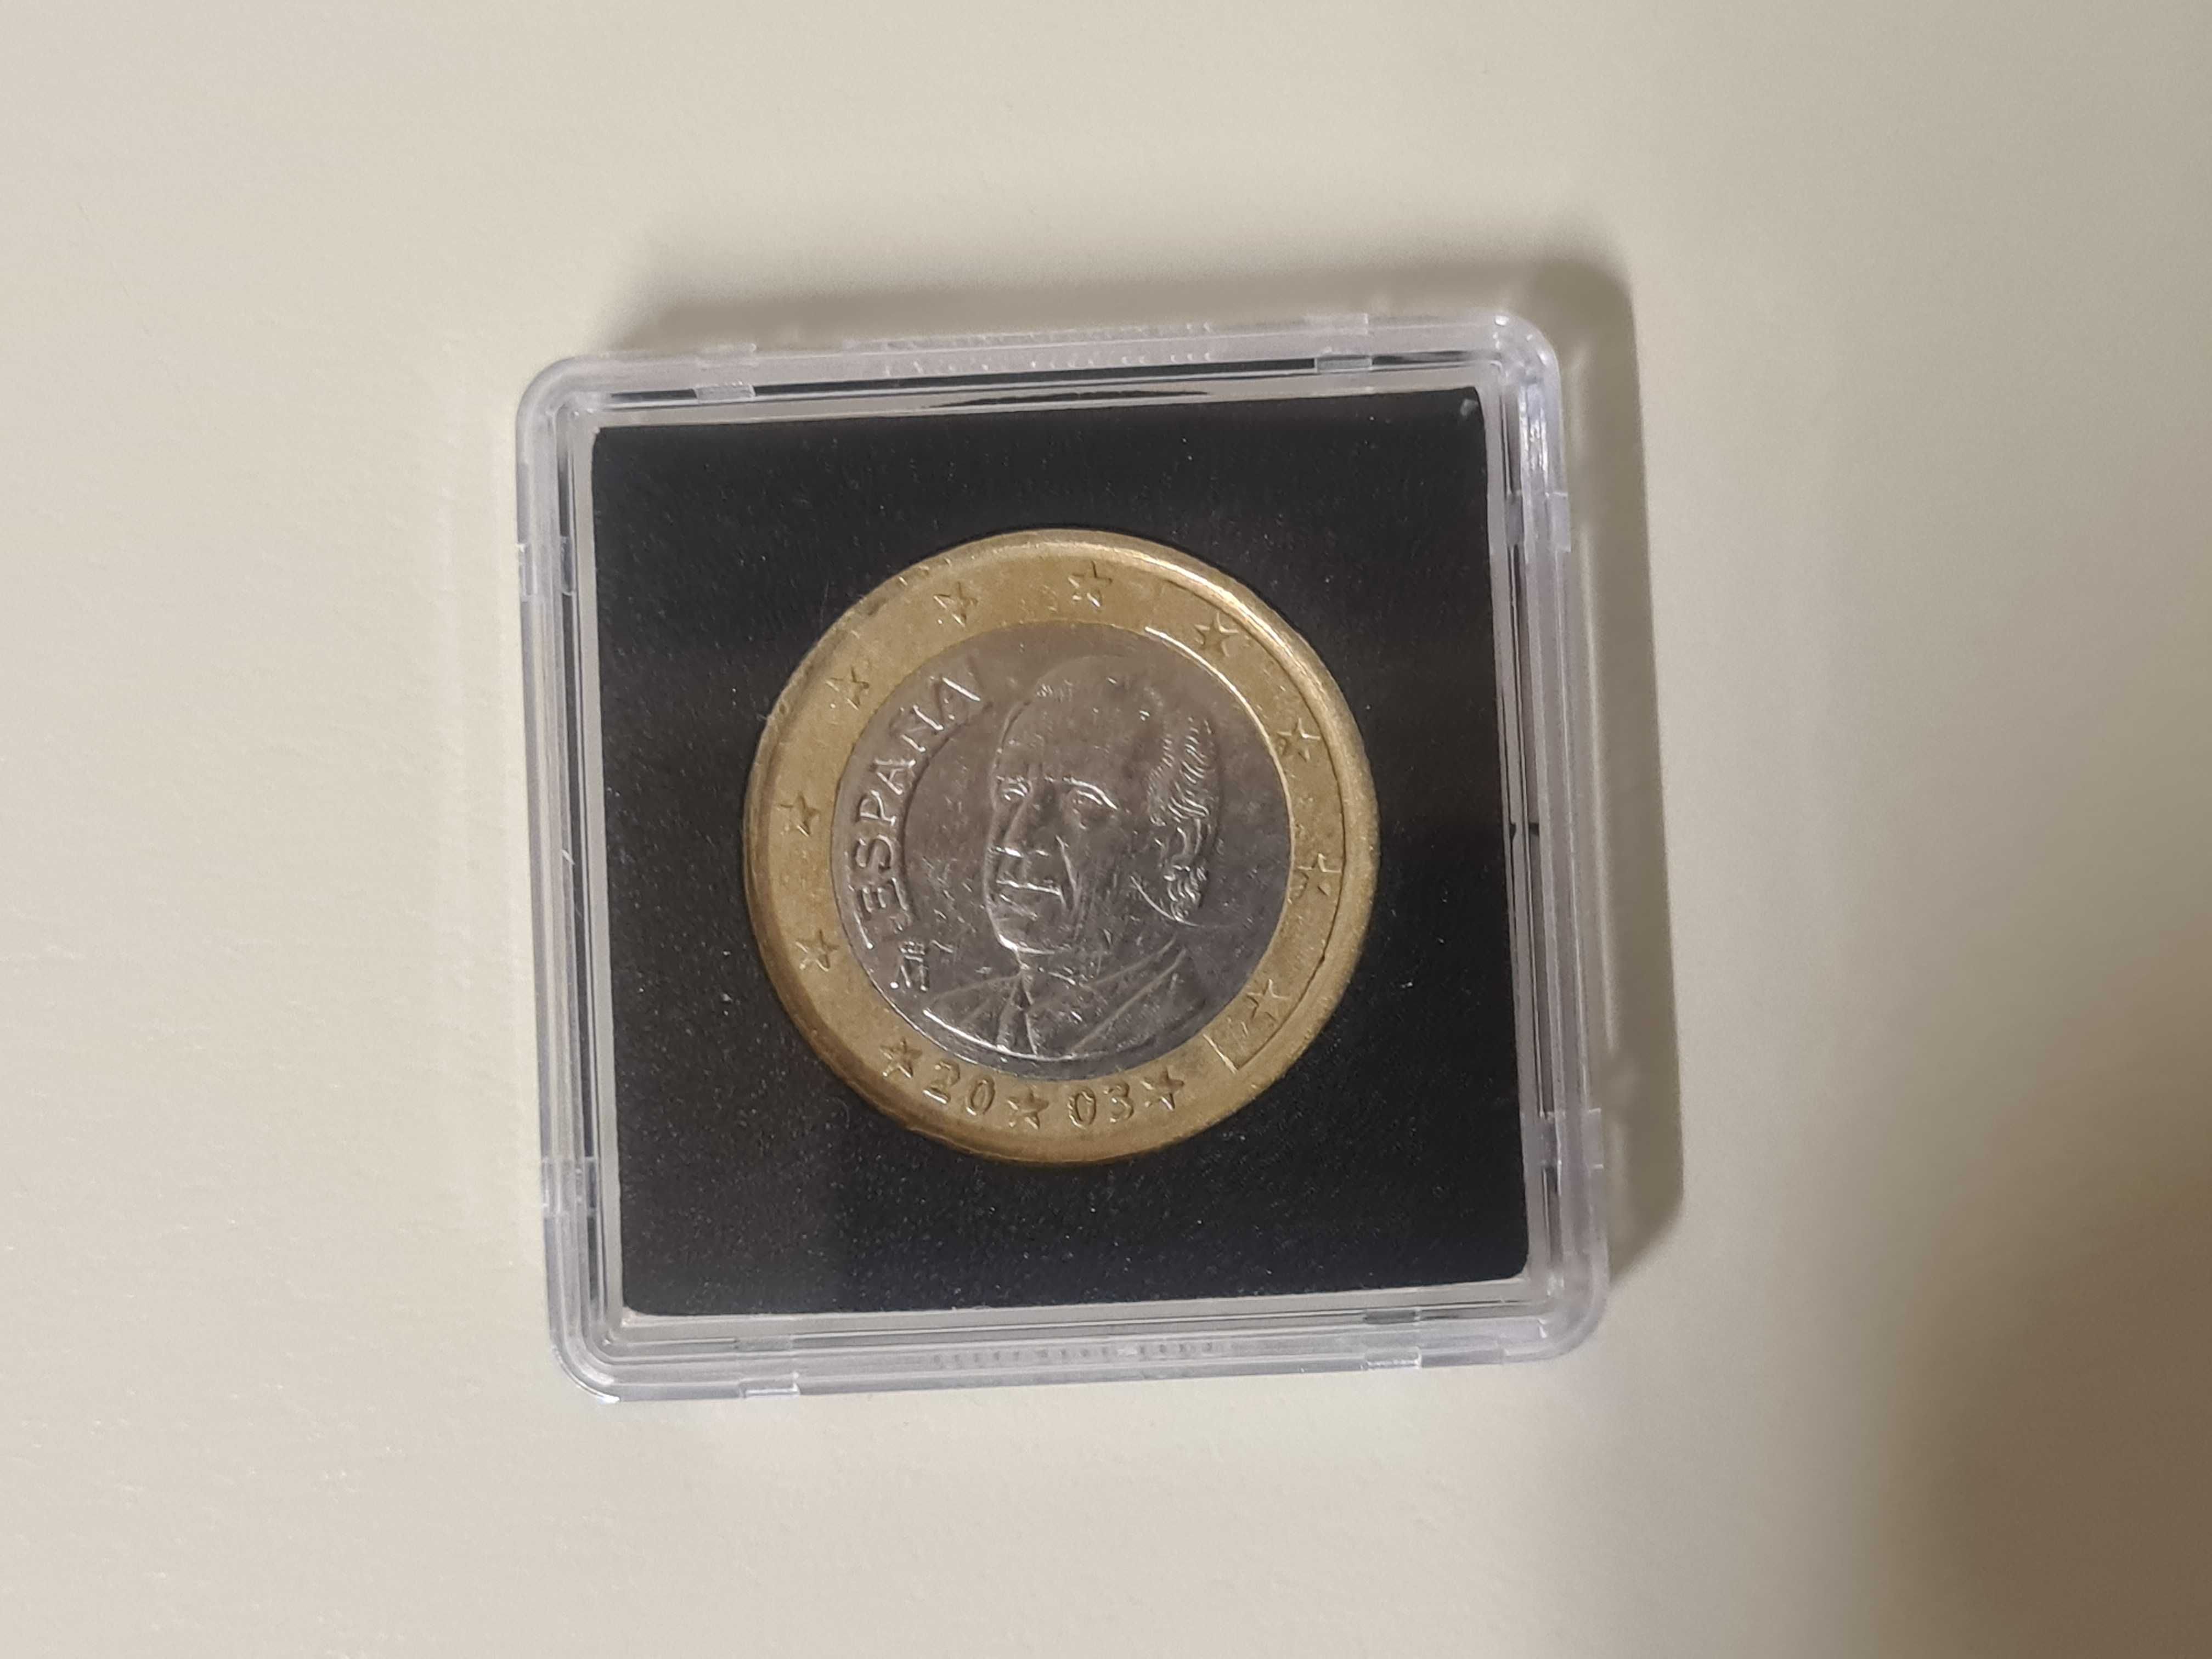 Monede de colectie necirculate rare in capsule